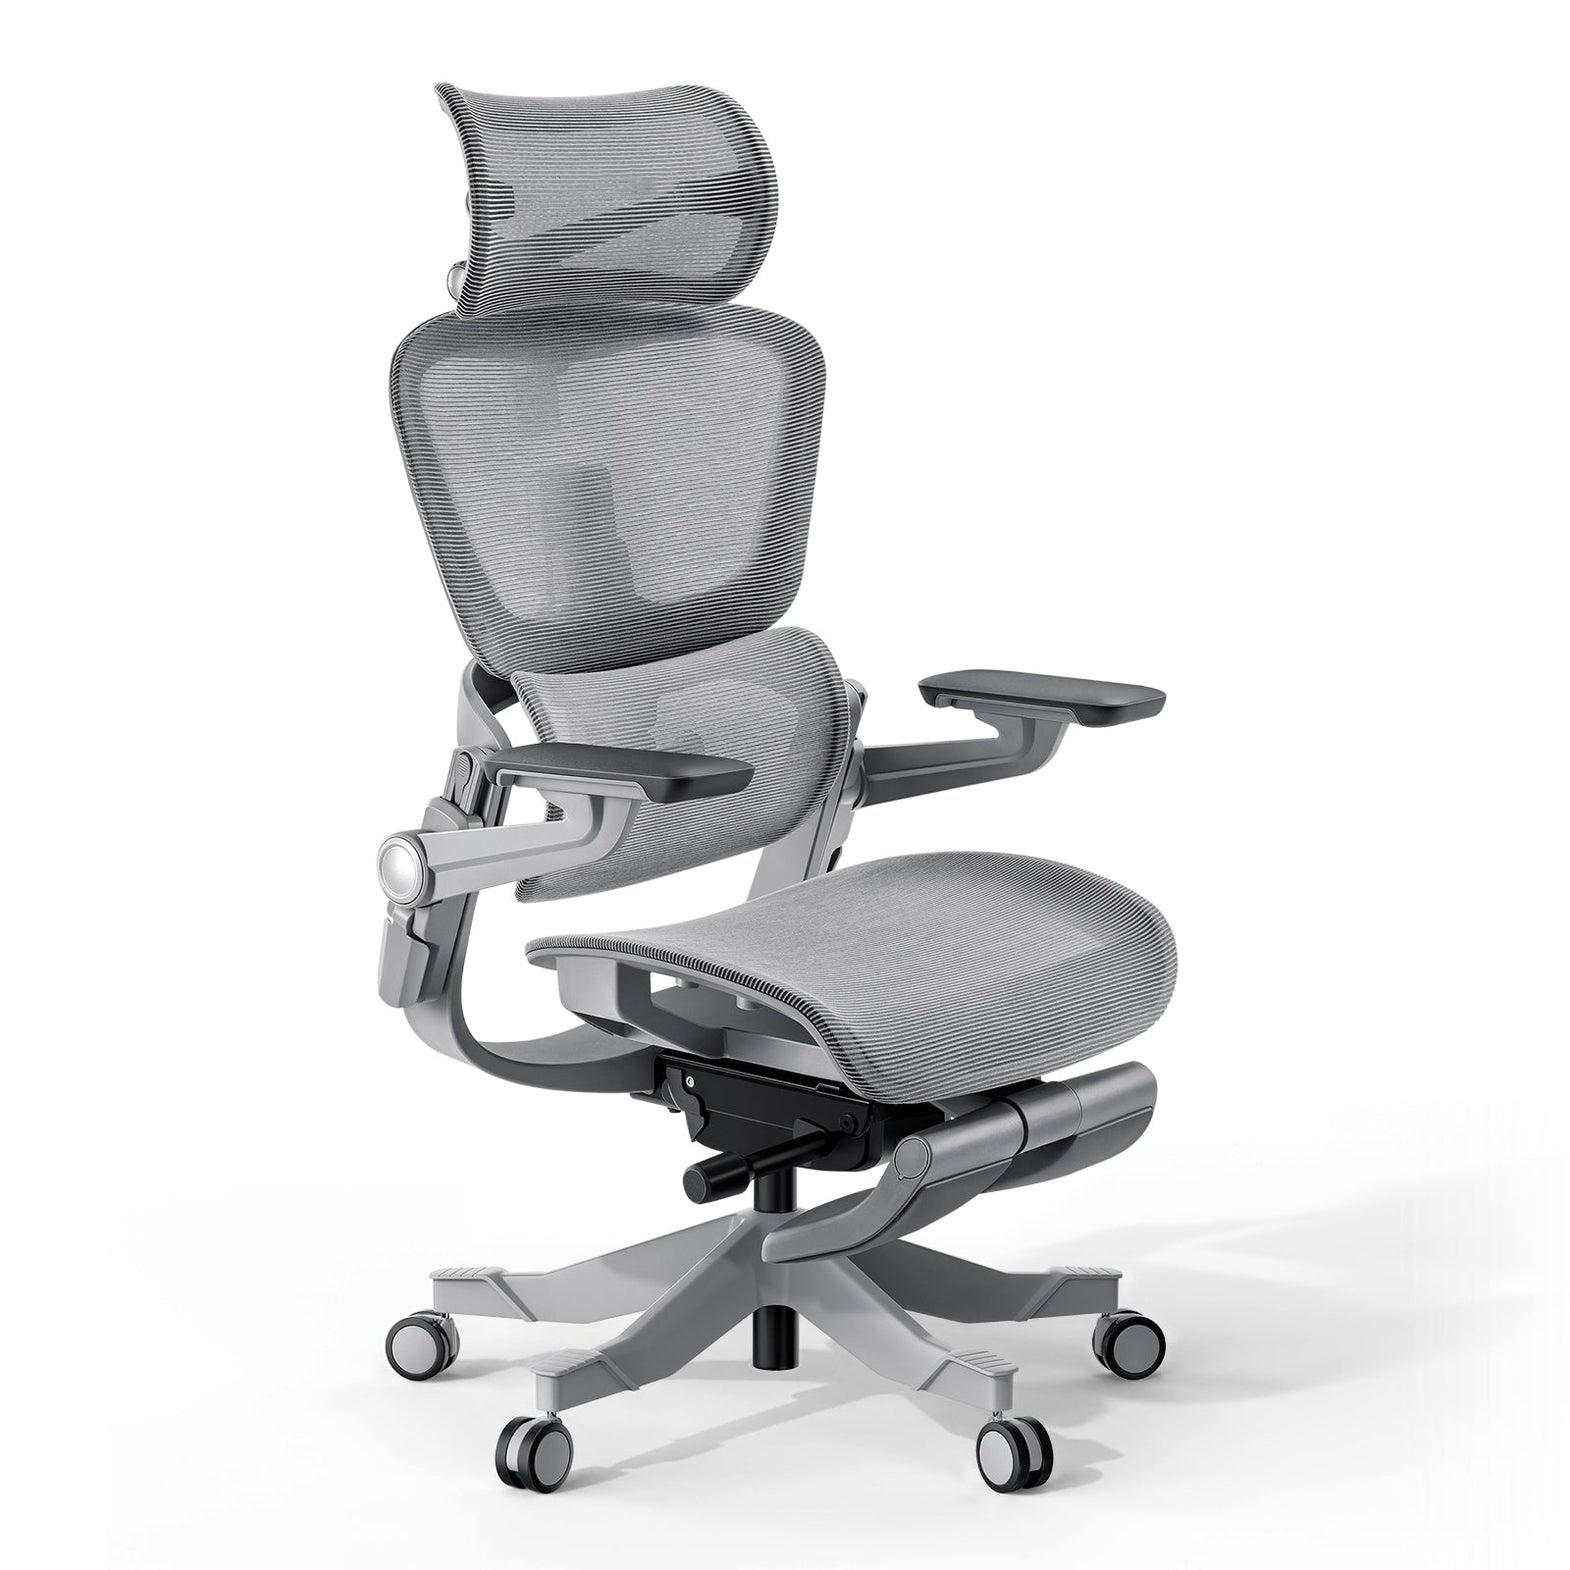 H1 Pro Ergonomic Office Chair - Letcmv